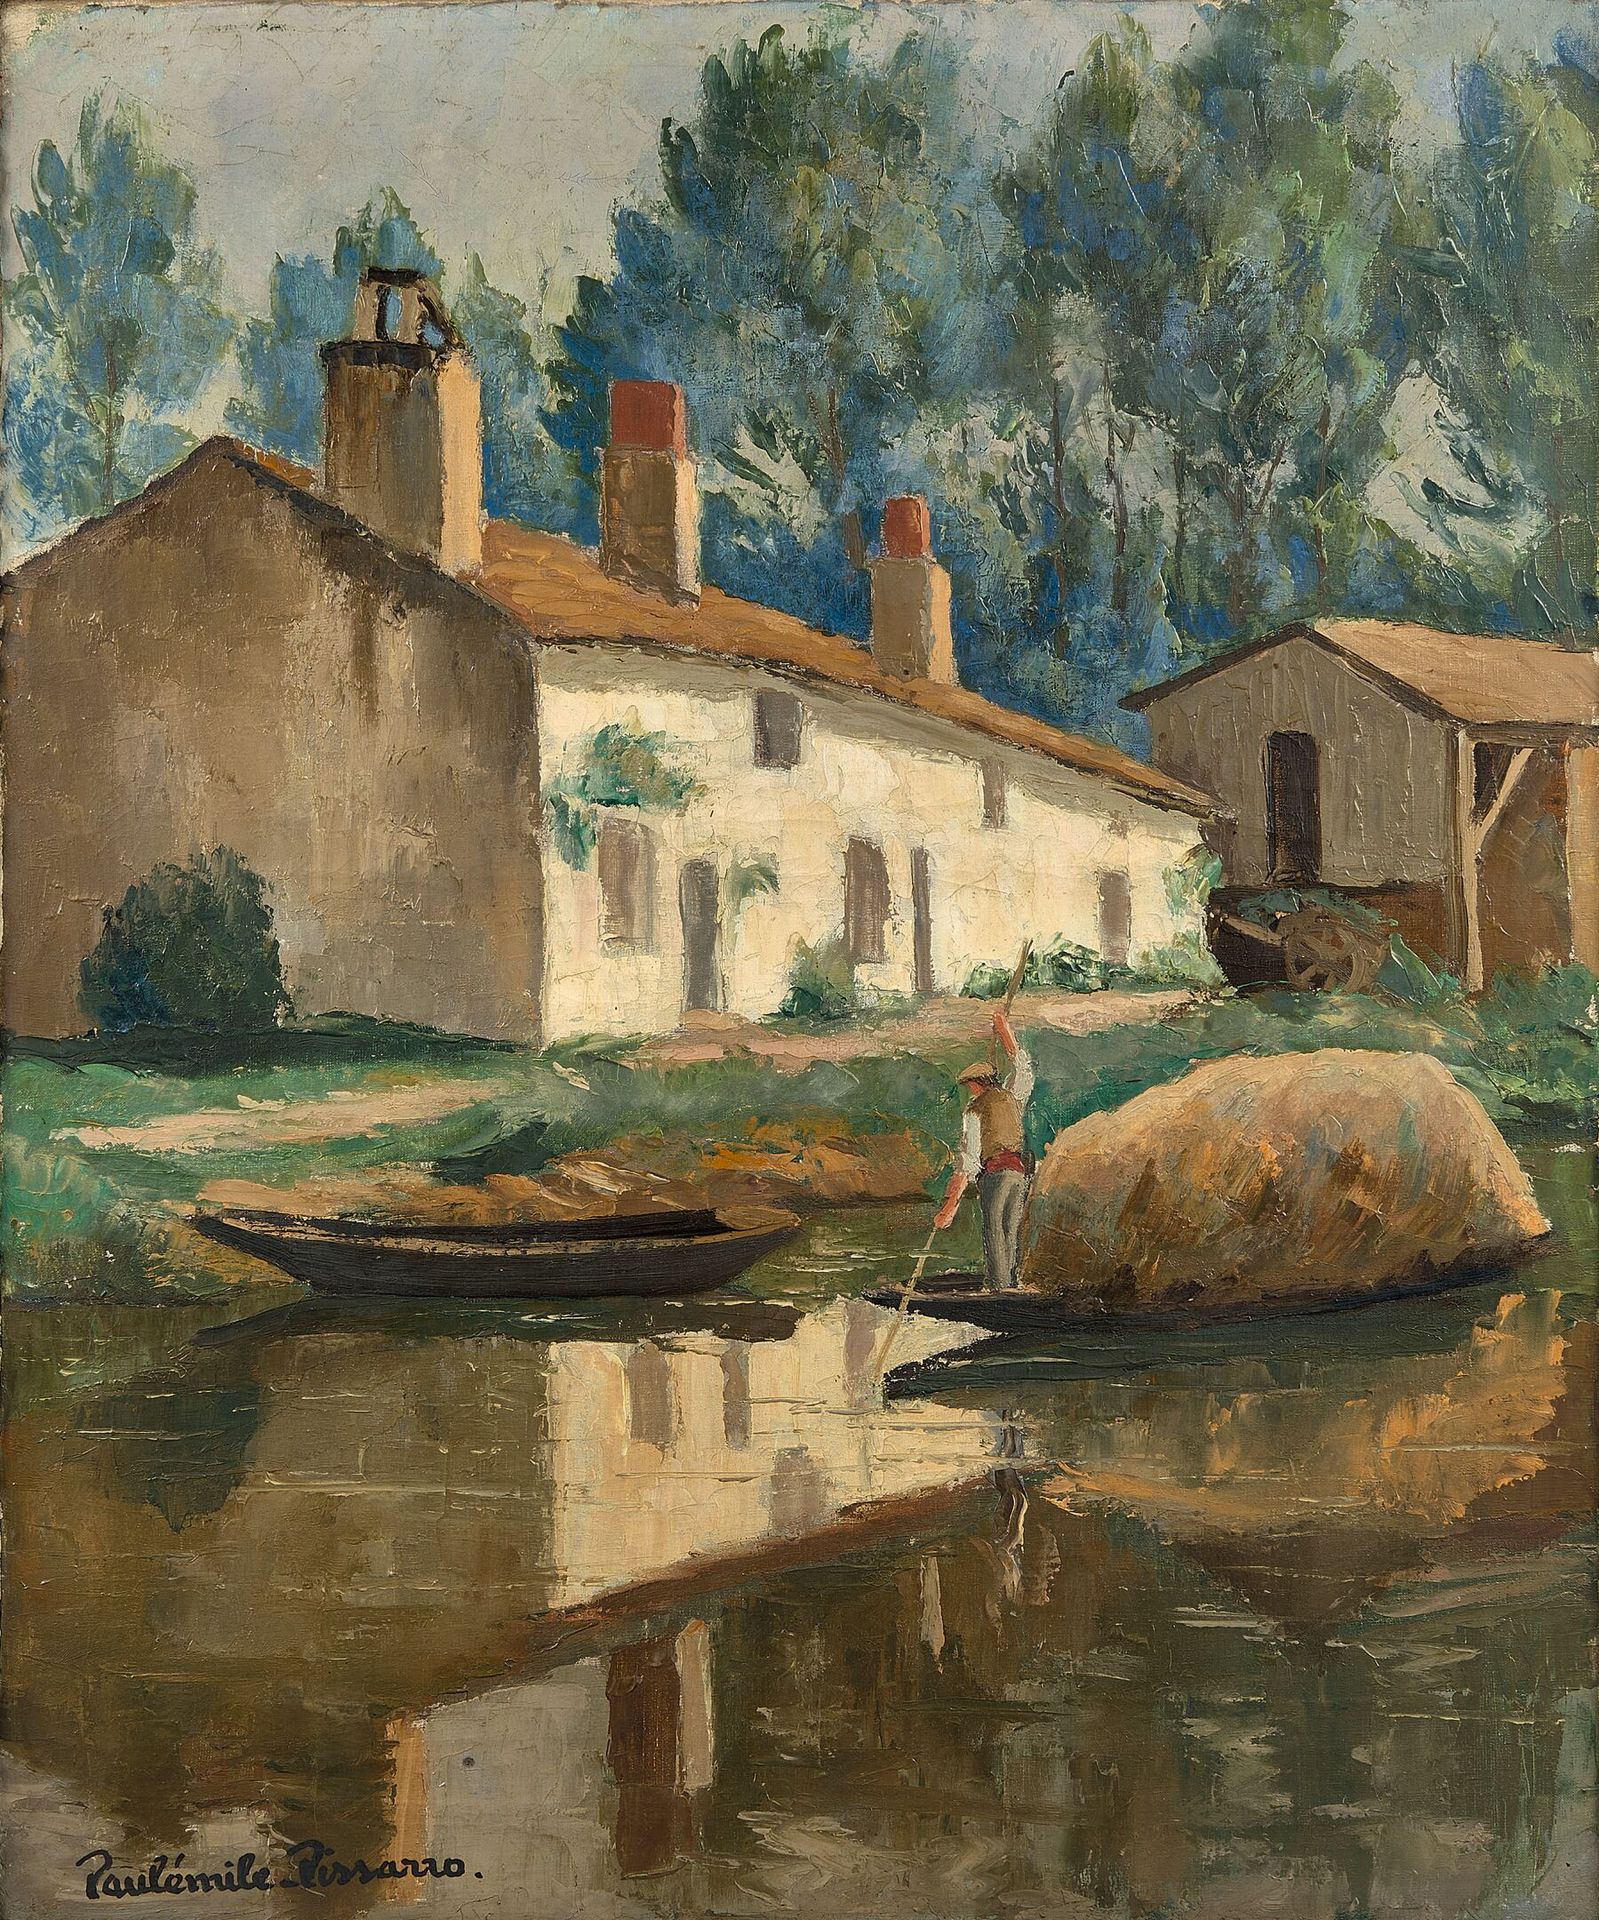 Null 保罗-埃米尔-皮萨罗 (1884-1972)
塞纳河上的农场和干草船 
布面油画，左下方有签名，背面有印刷。
65 x 54 cm